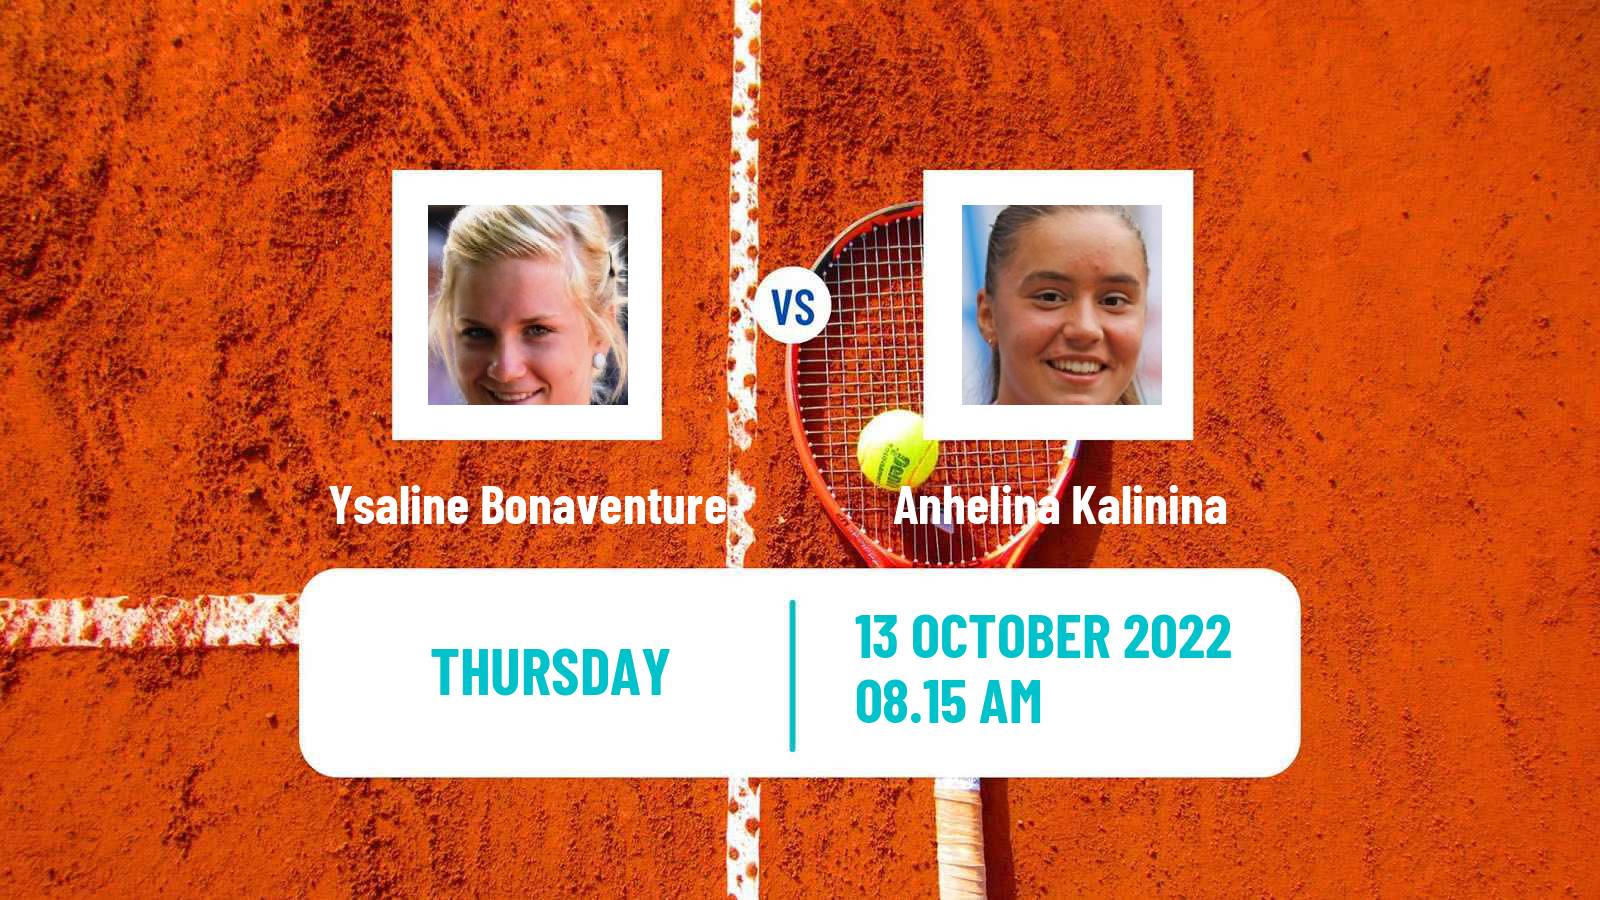 Tennis WTA Cluj Napoca Ysaline Bonaventure - Anhelina Kalinina